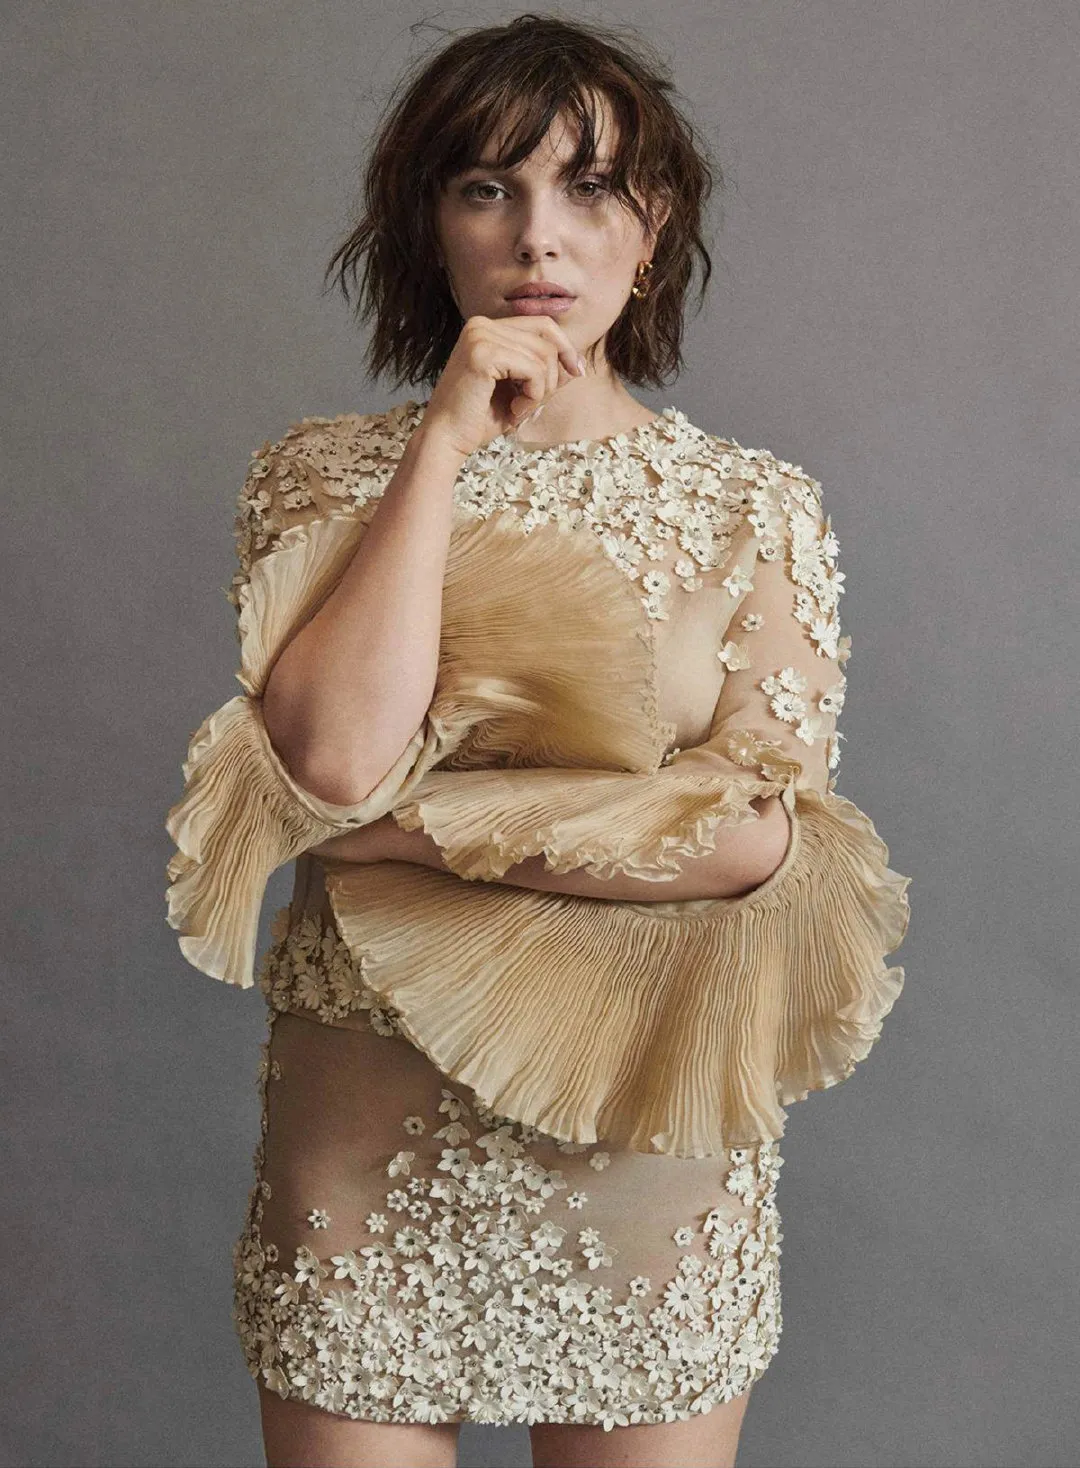 Millie Bobby Brown, "Vogue" magazine Mexico & Latin America June issue portrait | FMV6